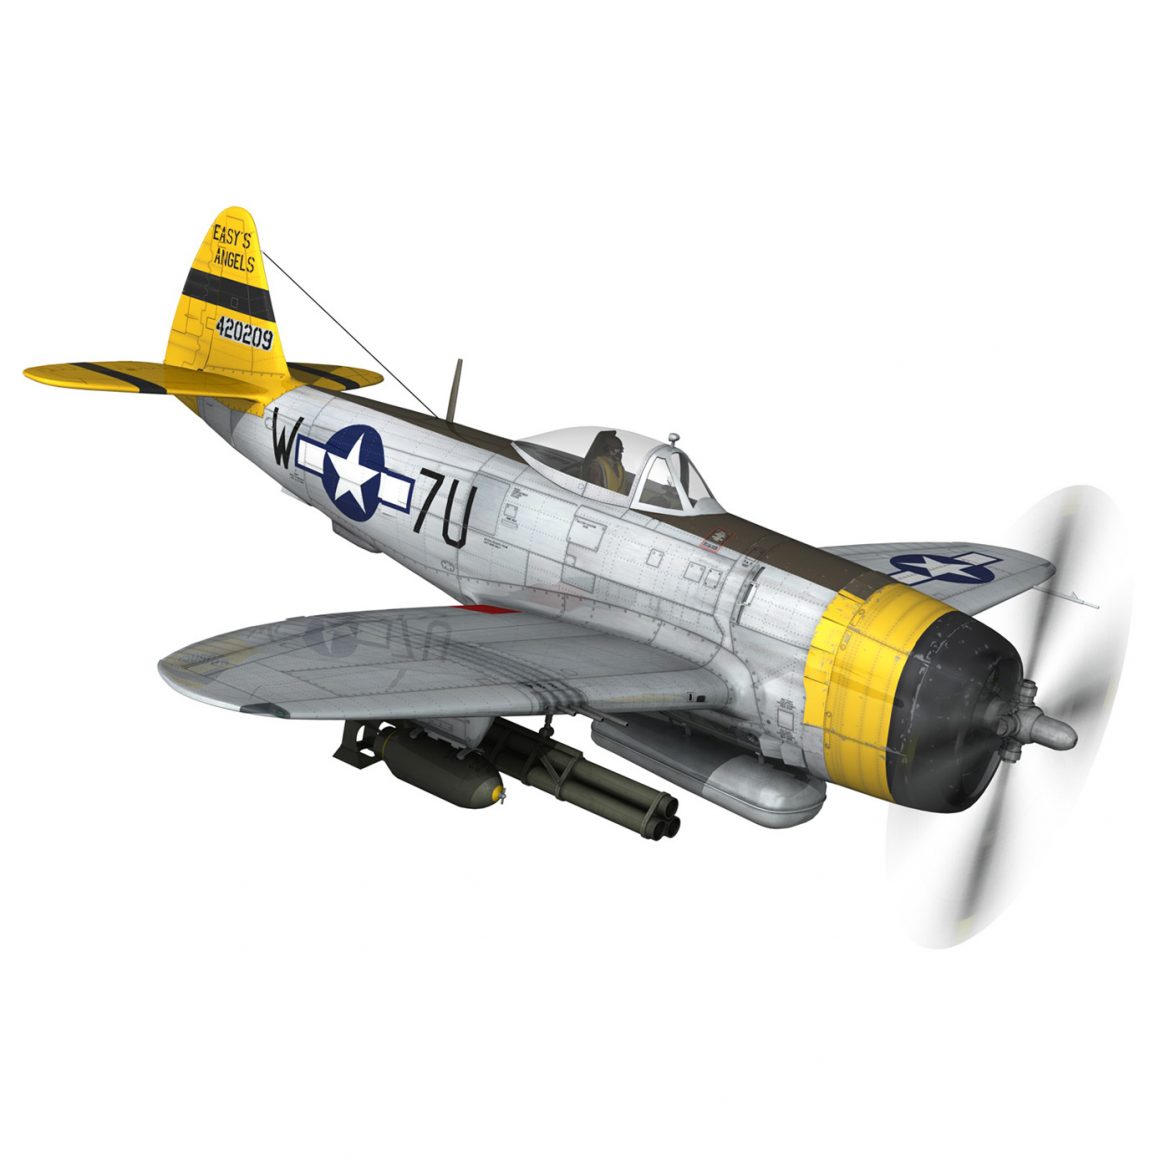 republic p-47d thunderbolt – eileen 3d model 3ds fbx c4d lwo obj 299941